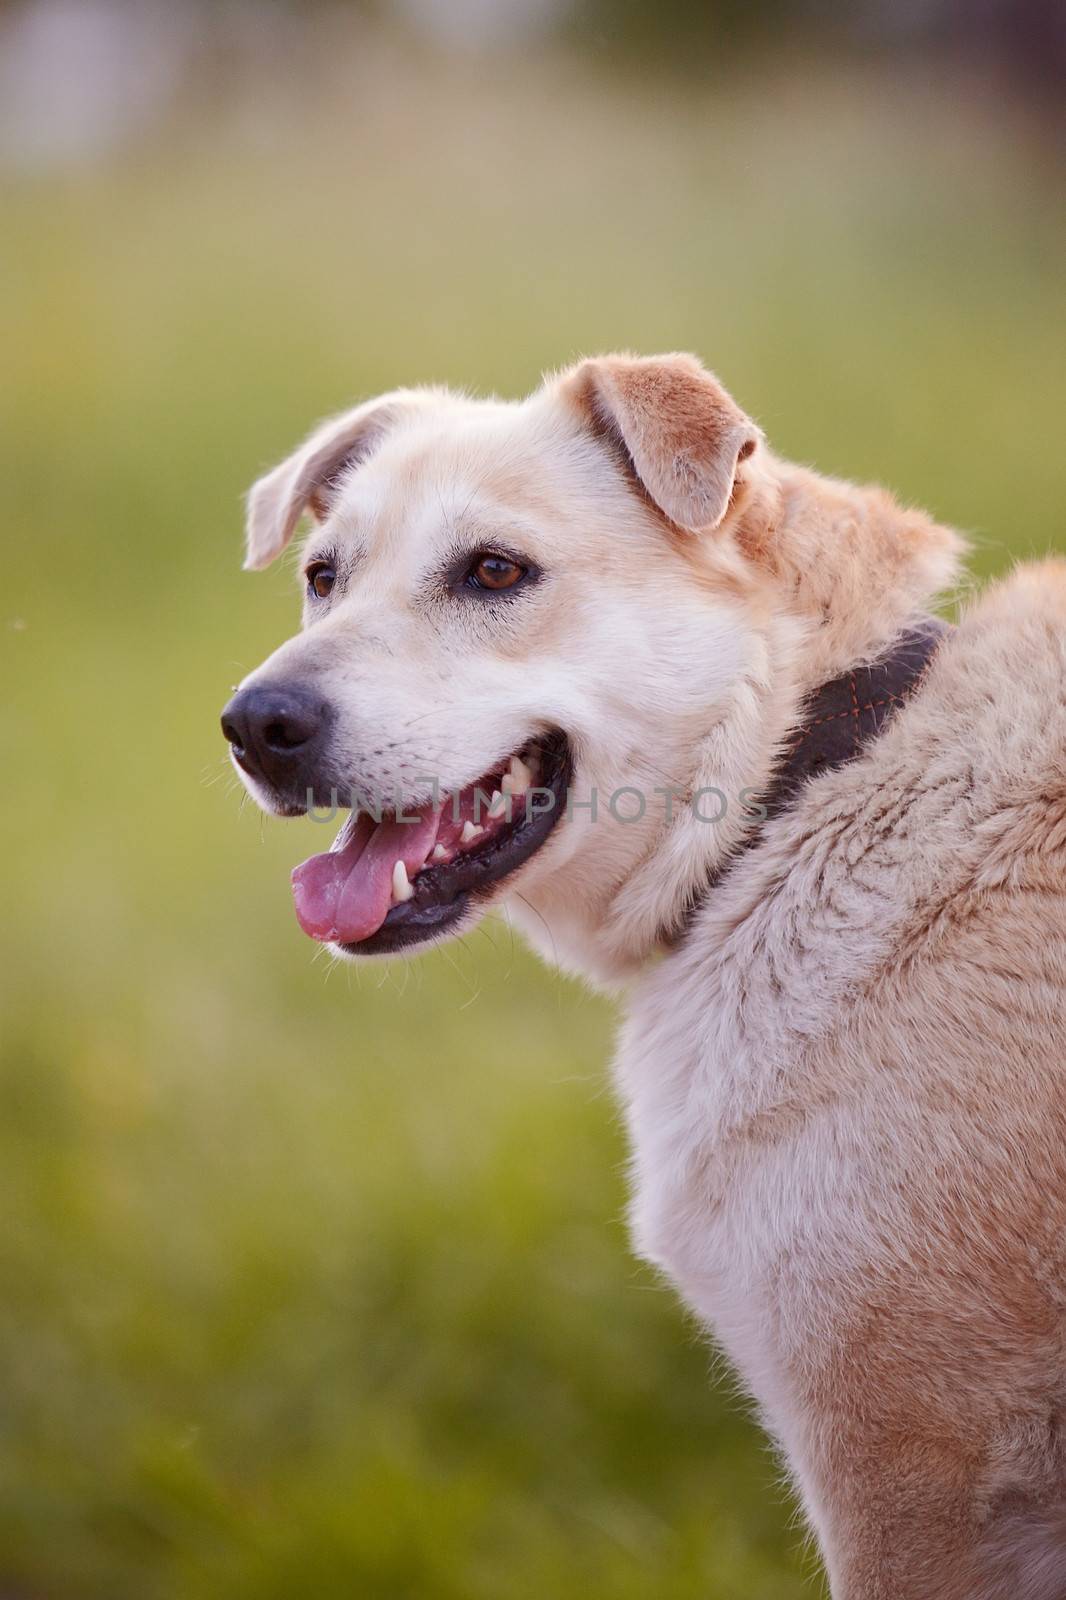 Beige dog. Dog on a grass. Not purebred dog. Doggie on walk. The beige large not purebred mongrel.